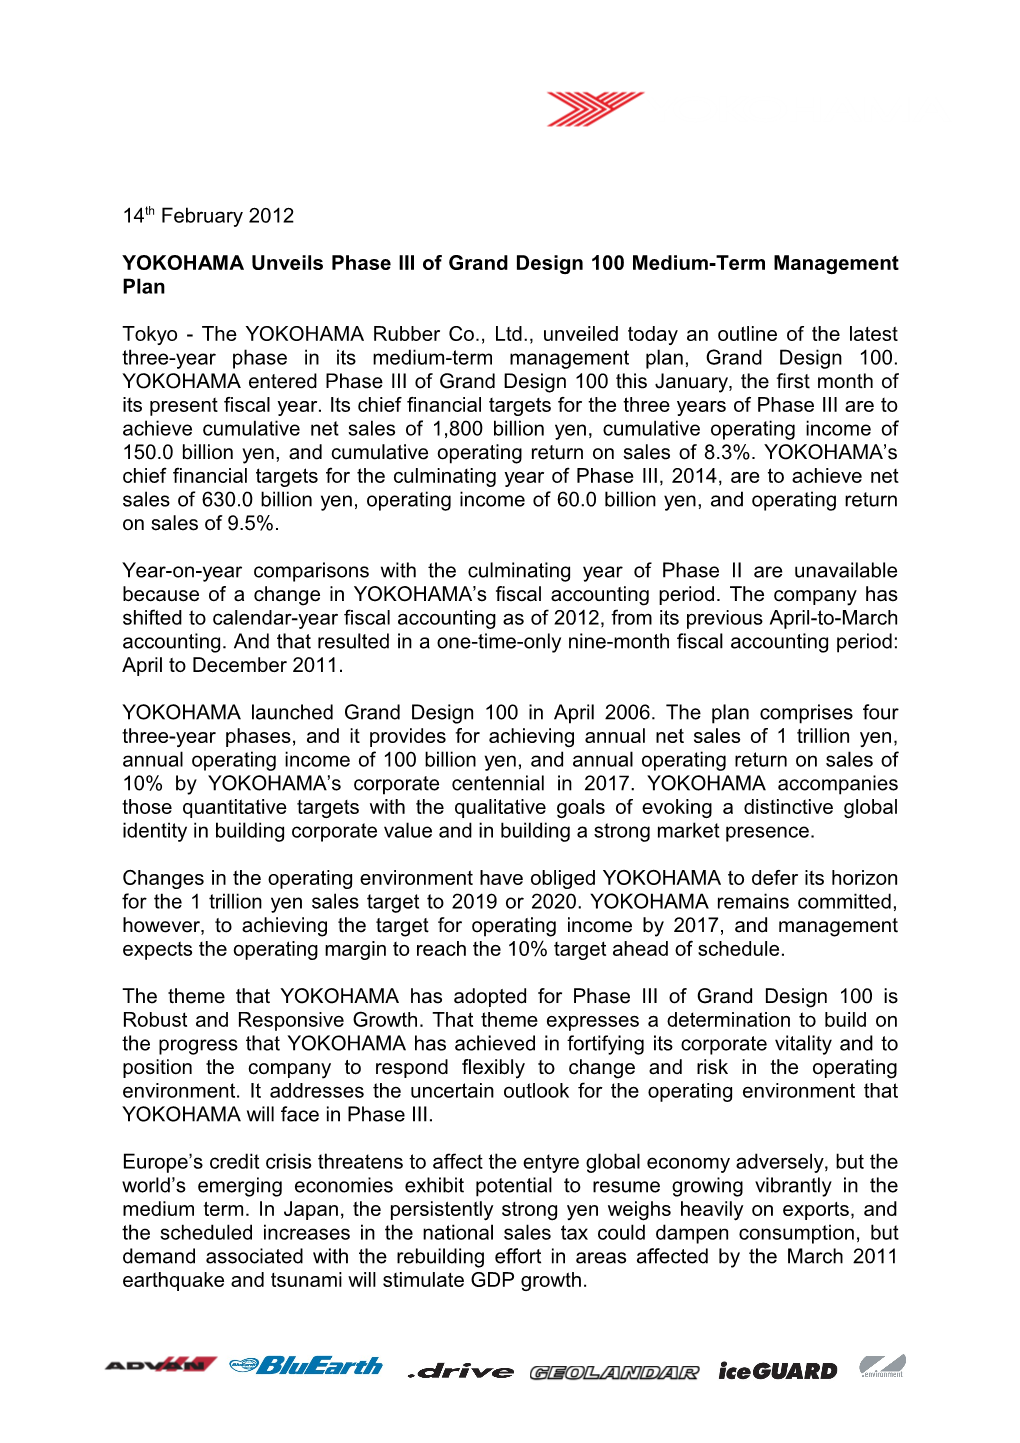 YOKOHAMA Unveils Phase III of Grand Design 100Medium-Term Management Plan